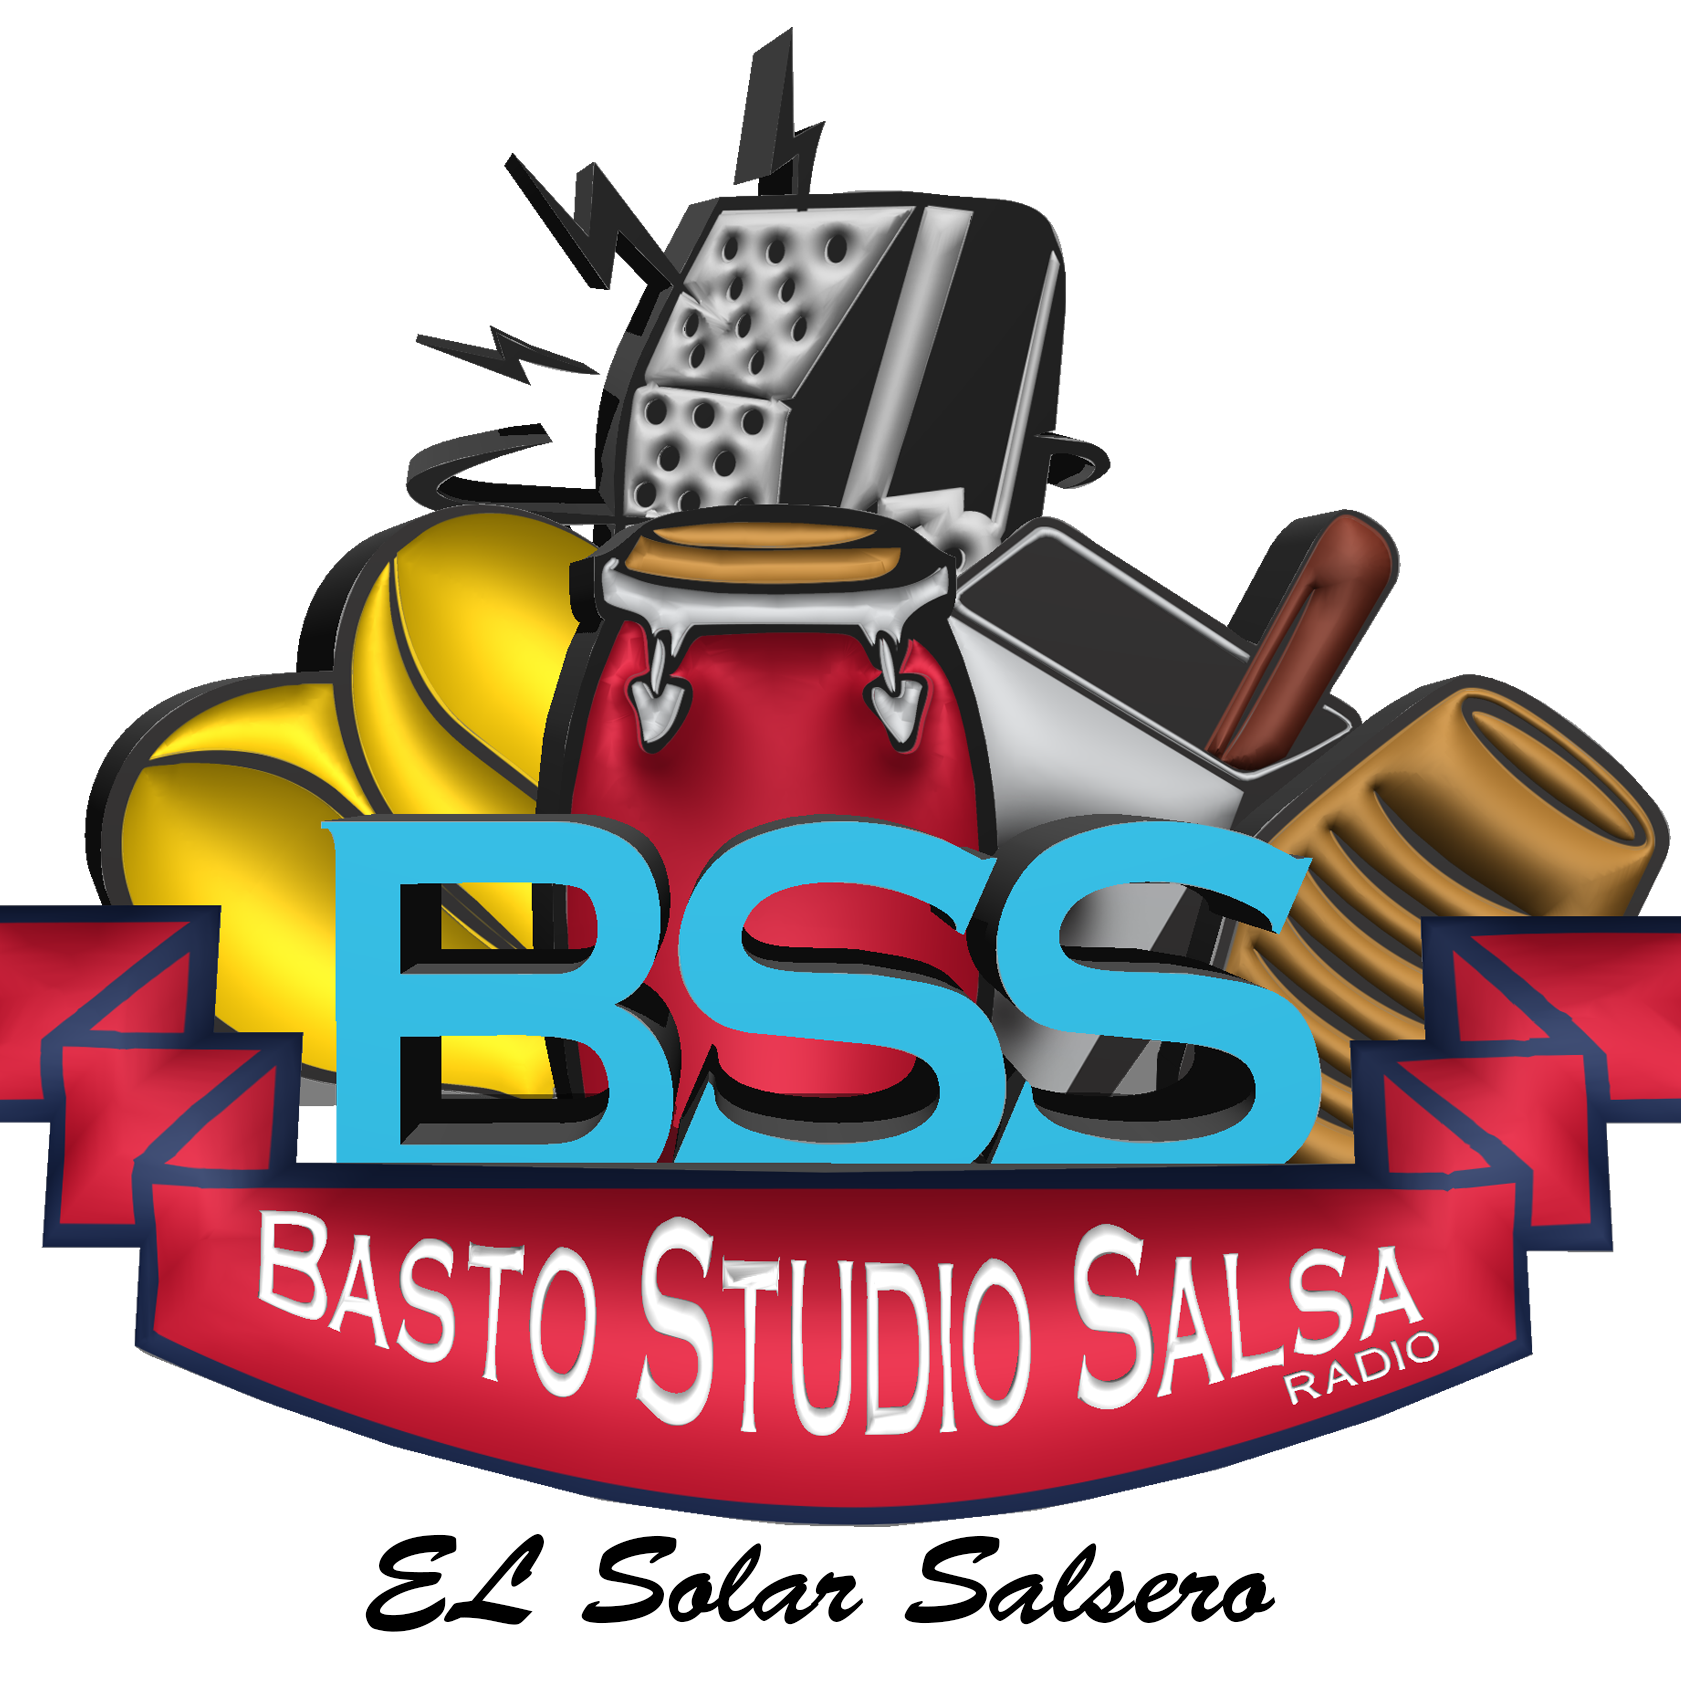 Basto Studio salsa